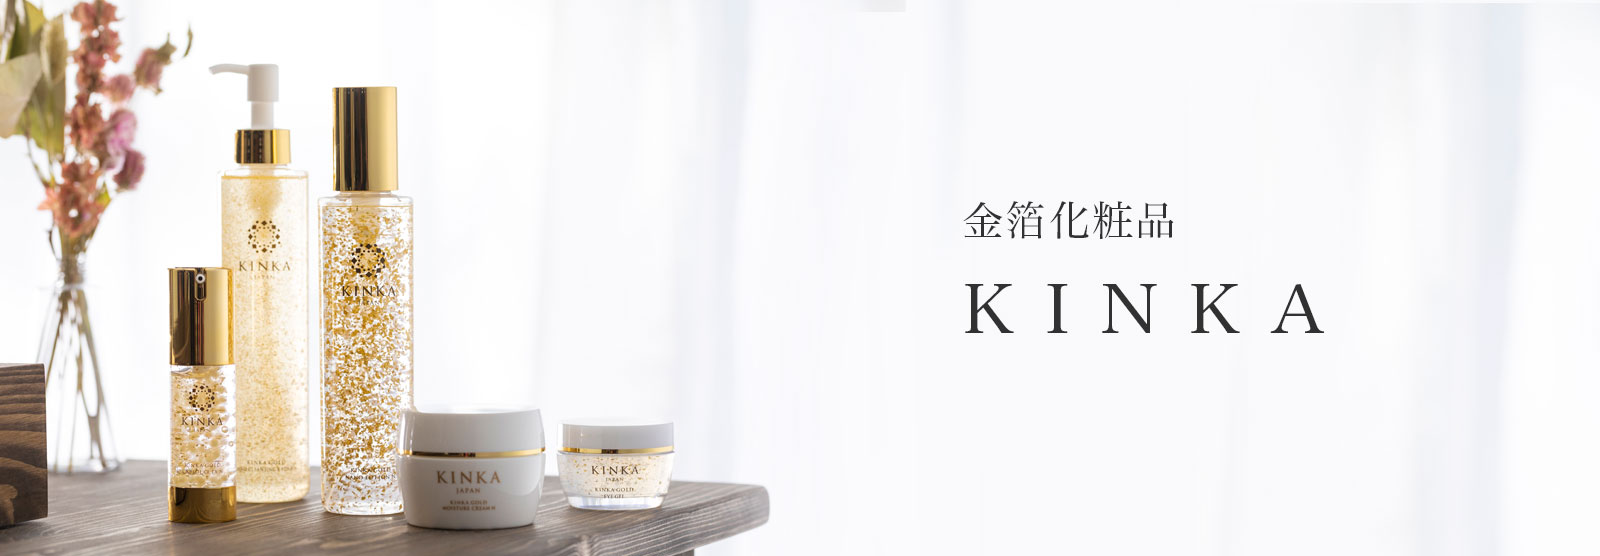 KINKA - 箔一の通販コスメBIHAKU CLUB|金箔化粧水、金箔パック、あぶら 